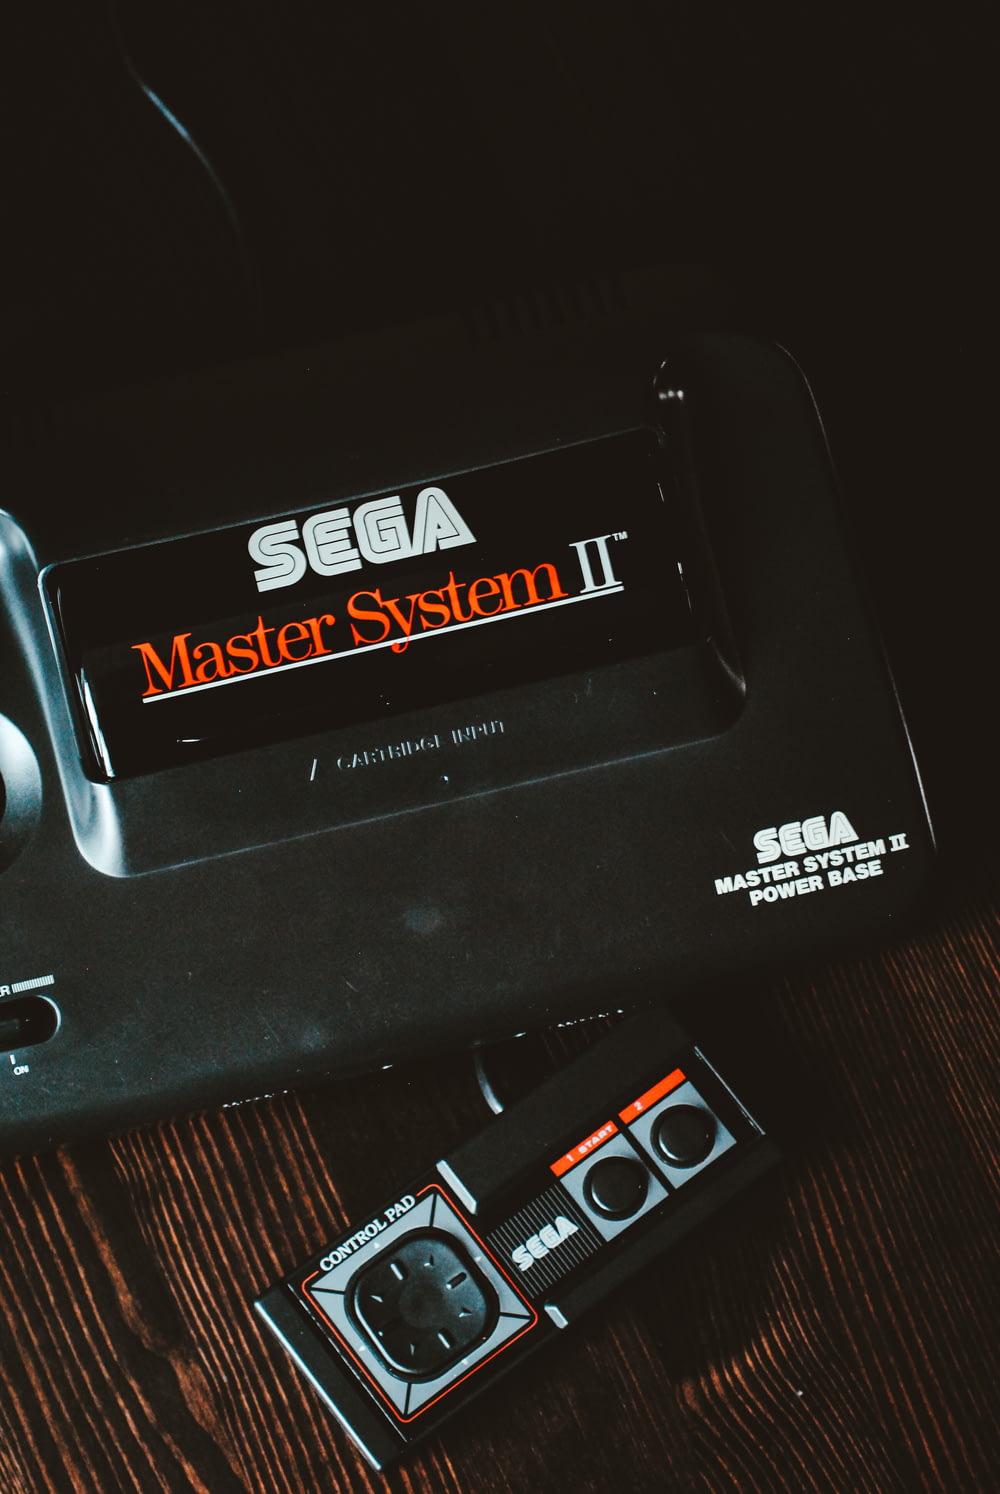 black Sega Master System II device on brown wooden surface